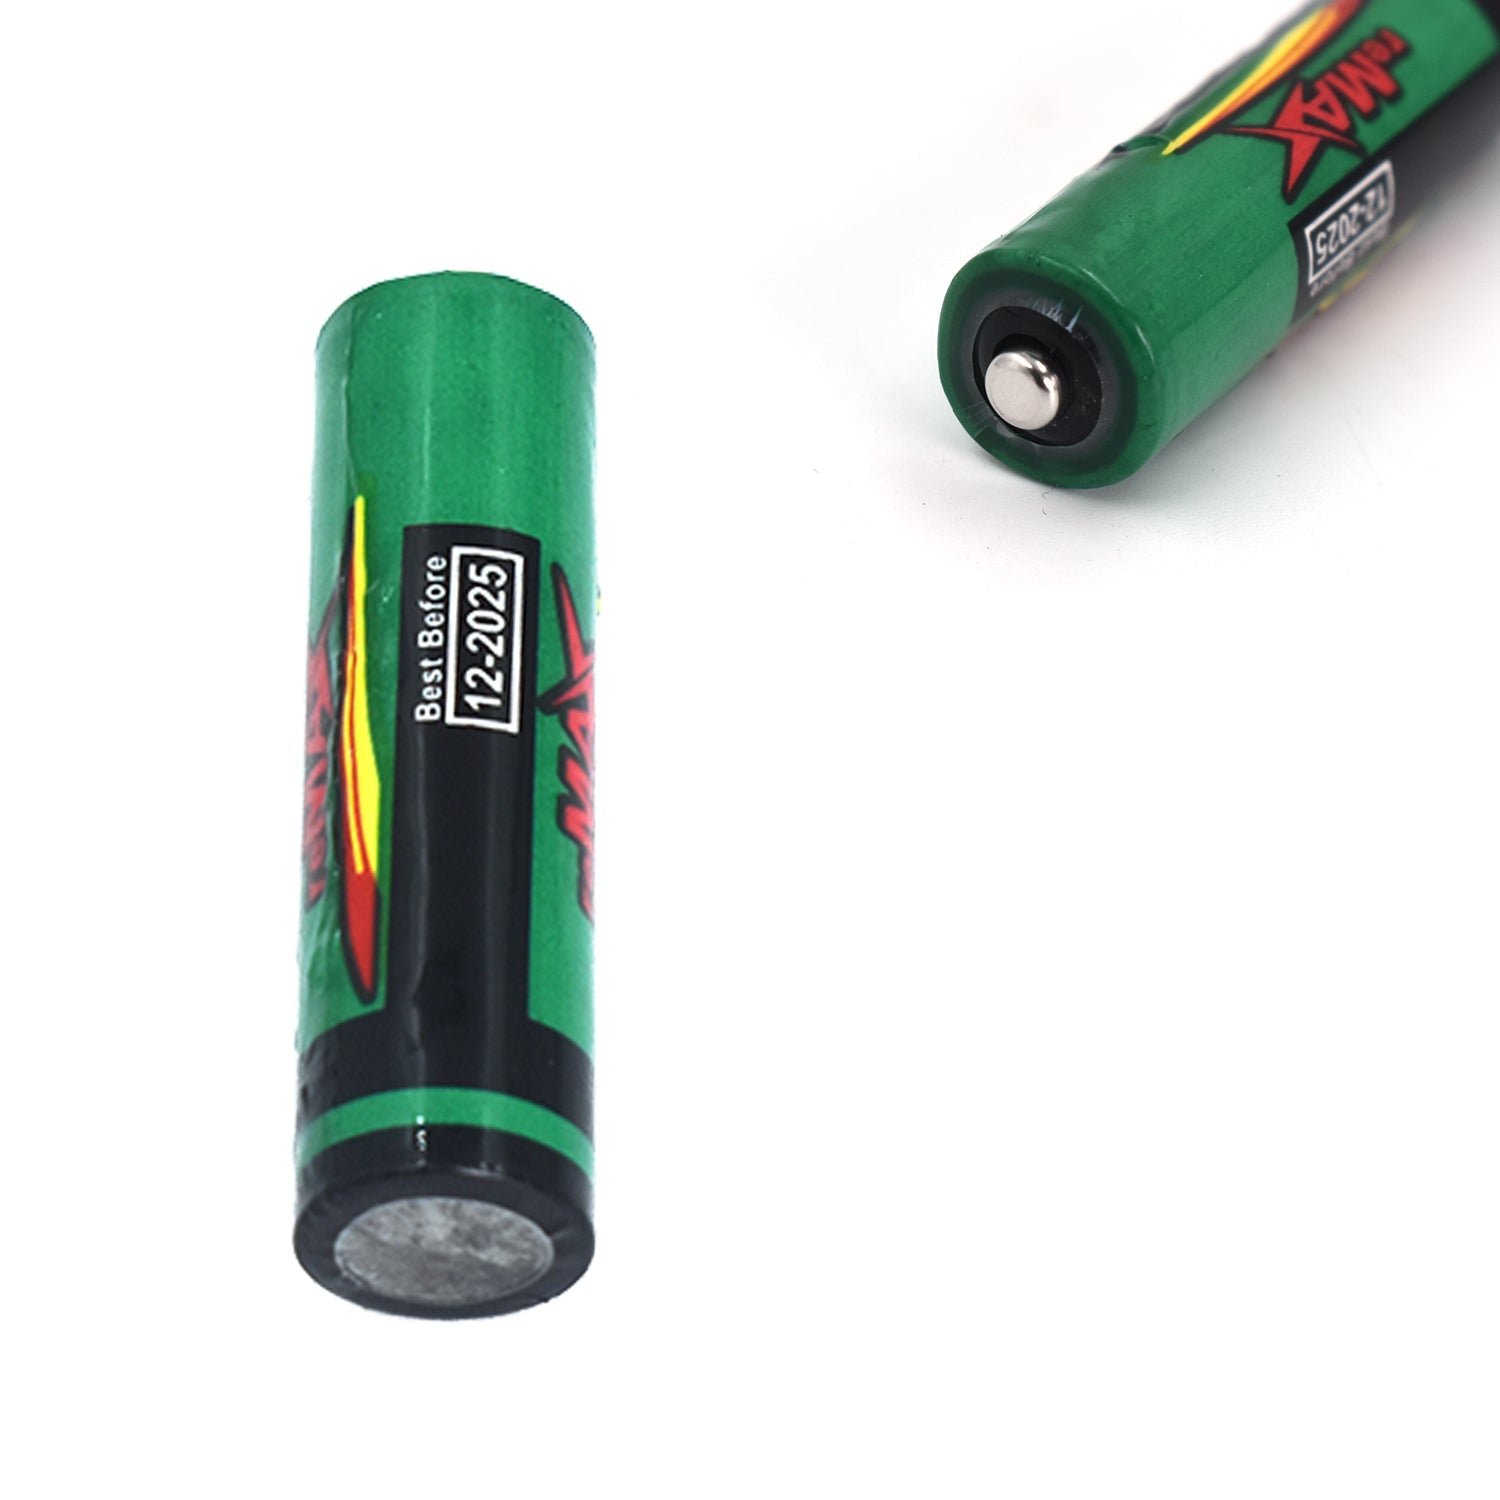 6121B AA Performance Alkaline Non-Rechargeable Batteries DeoDap